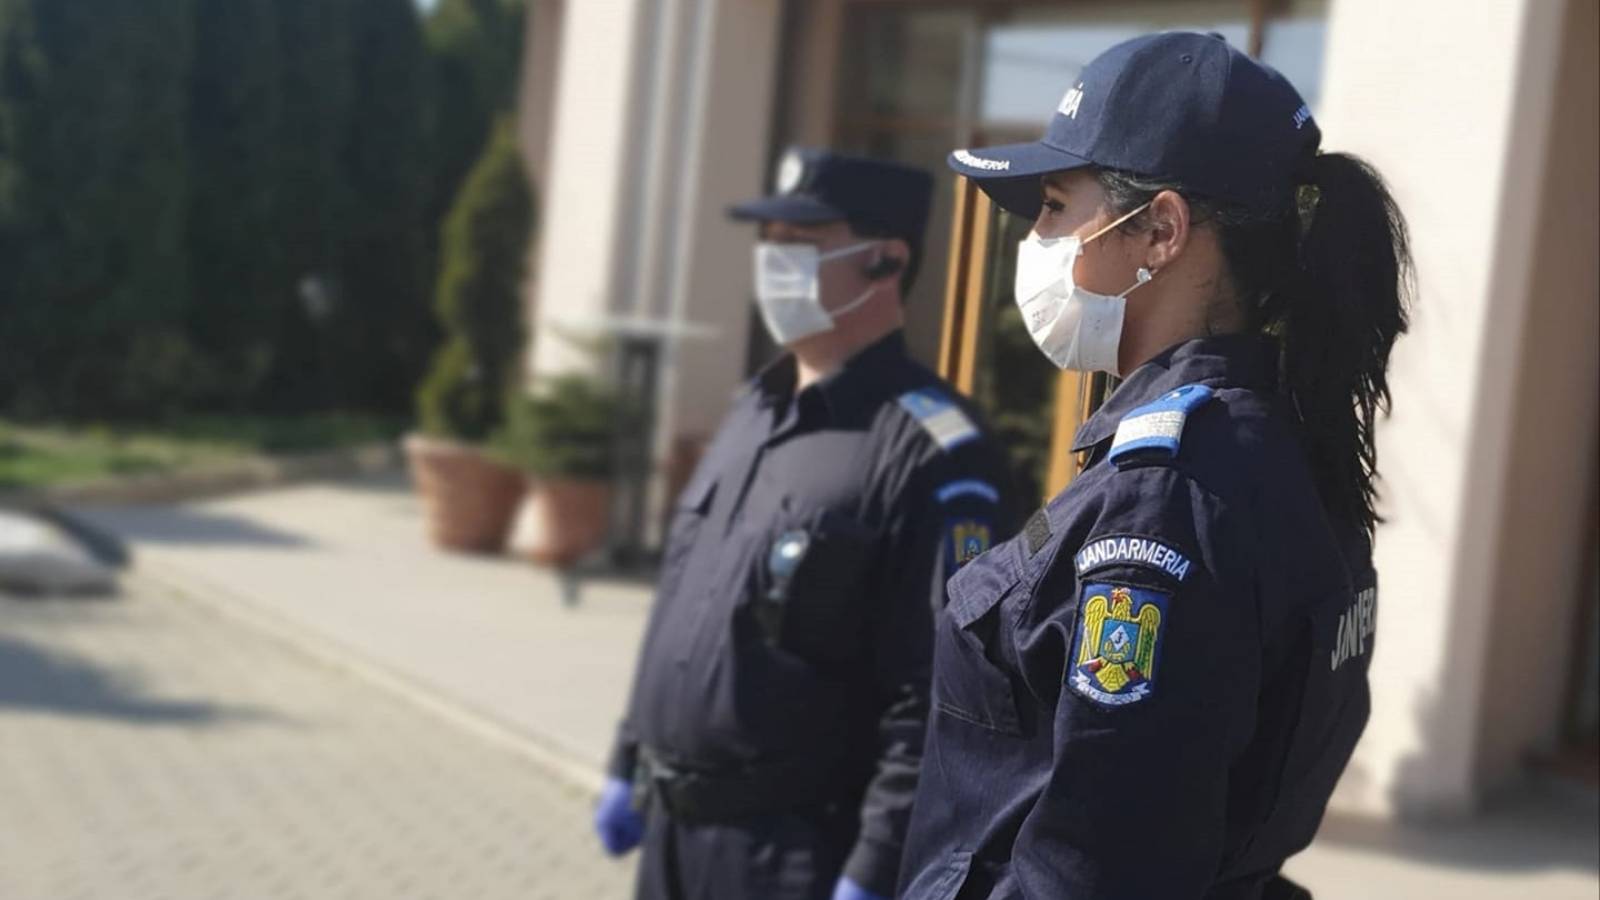 Raduno della gendarmeria rumena